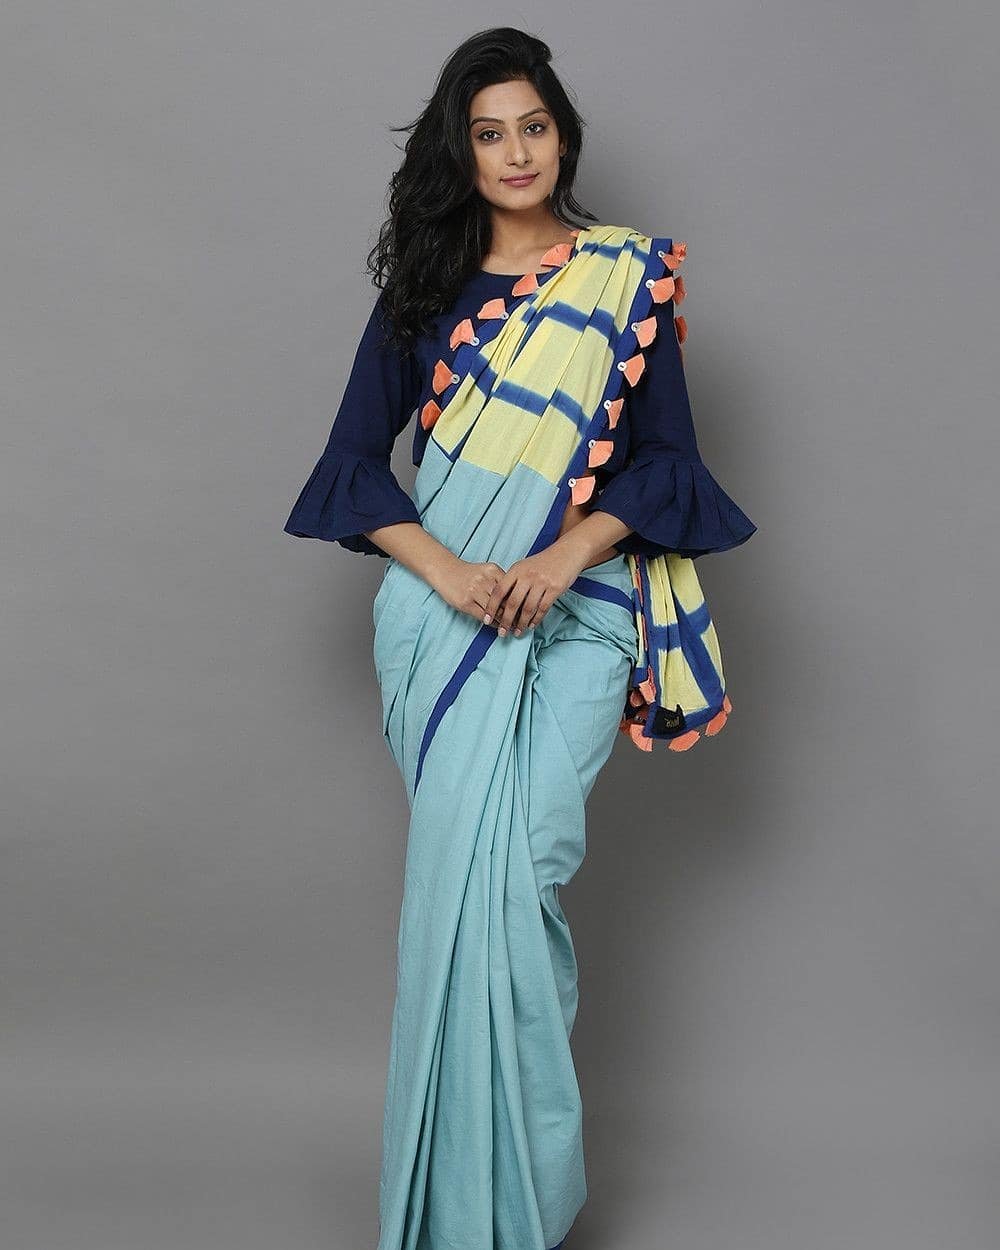 saree blouse designs 4 2